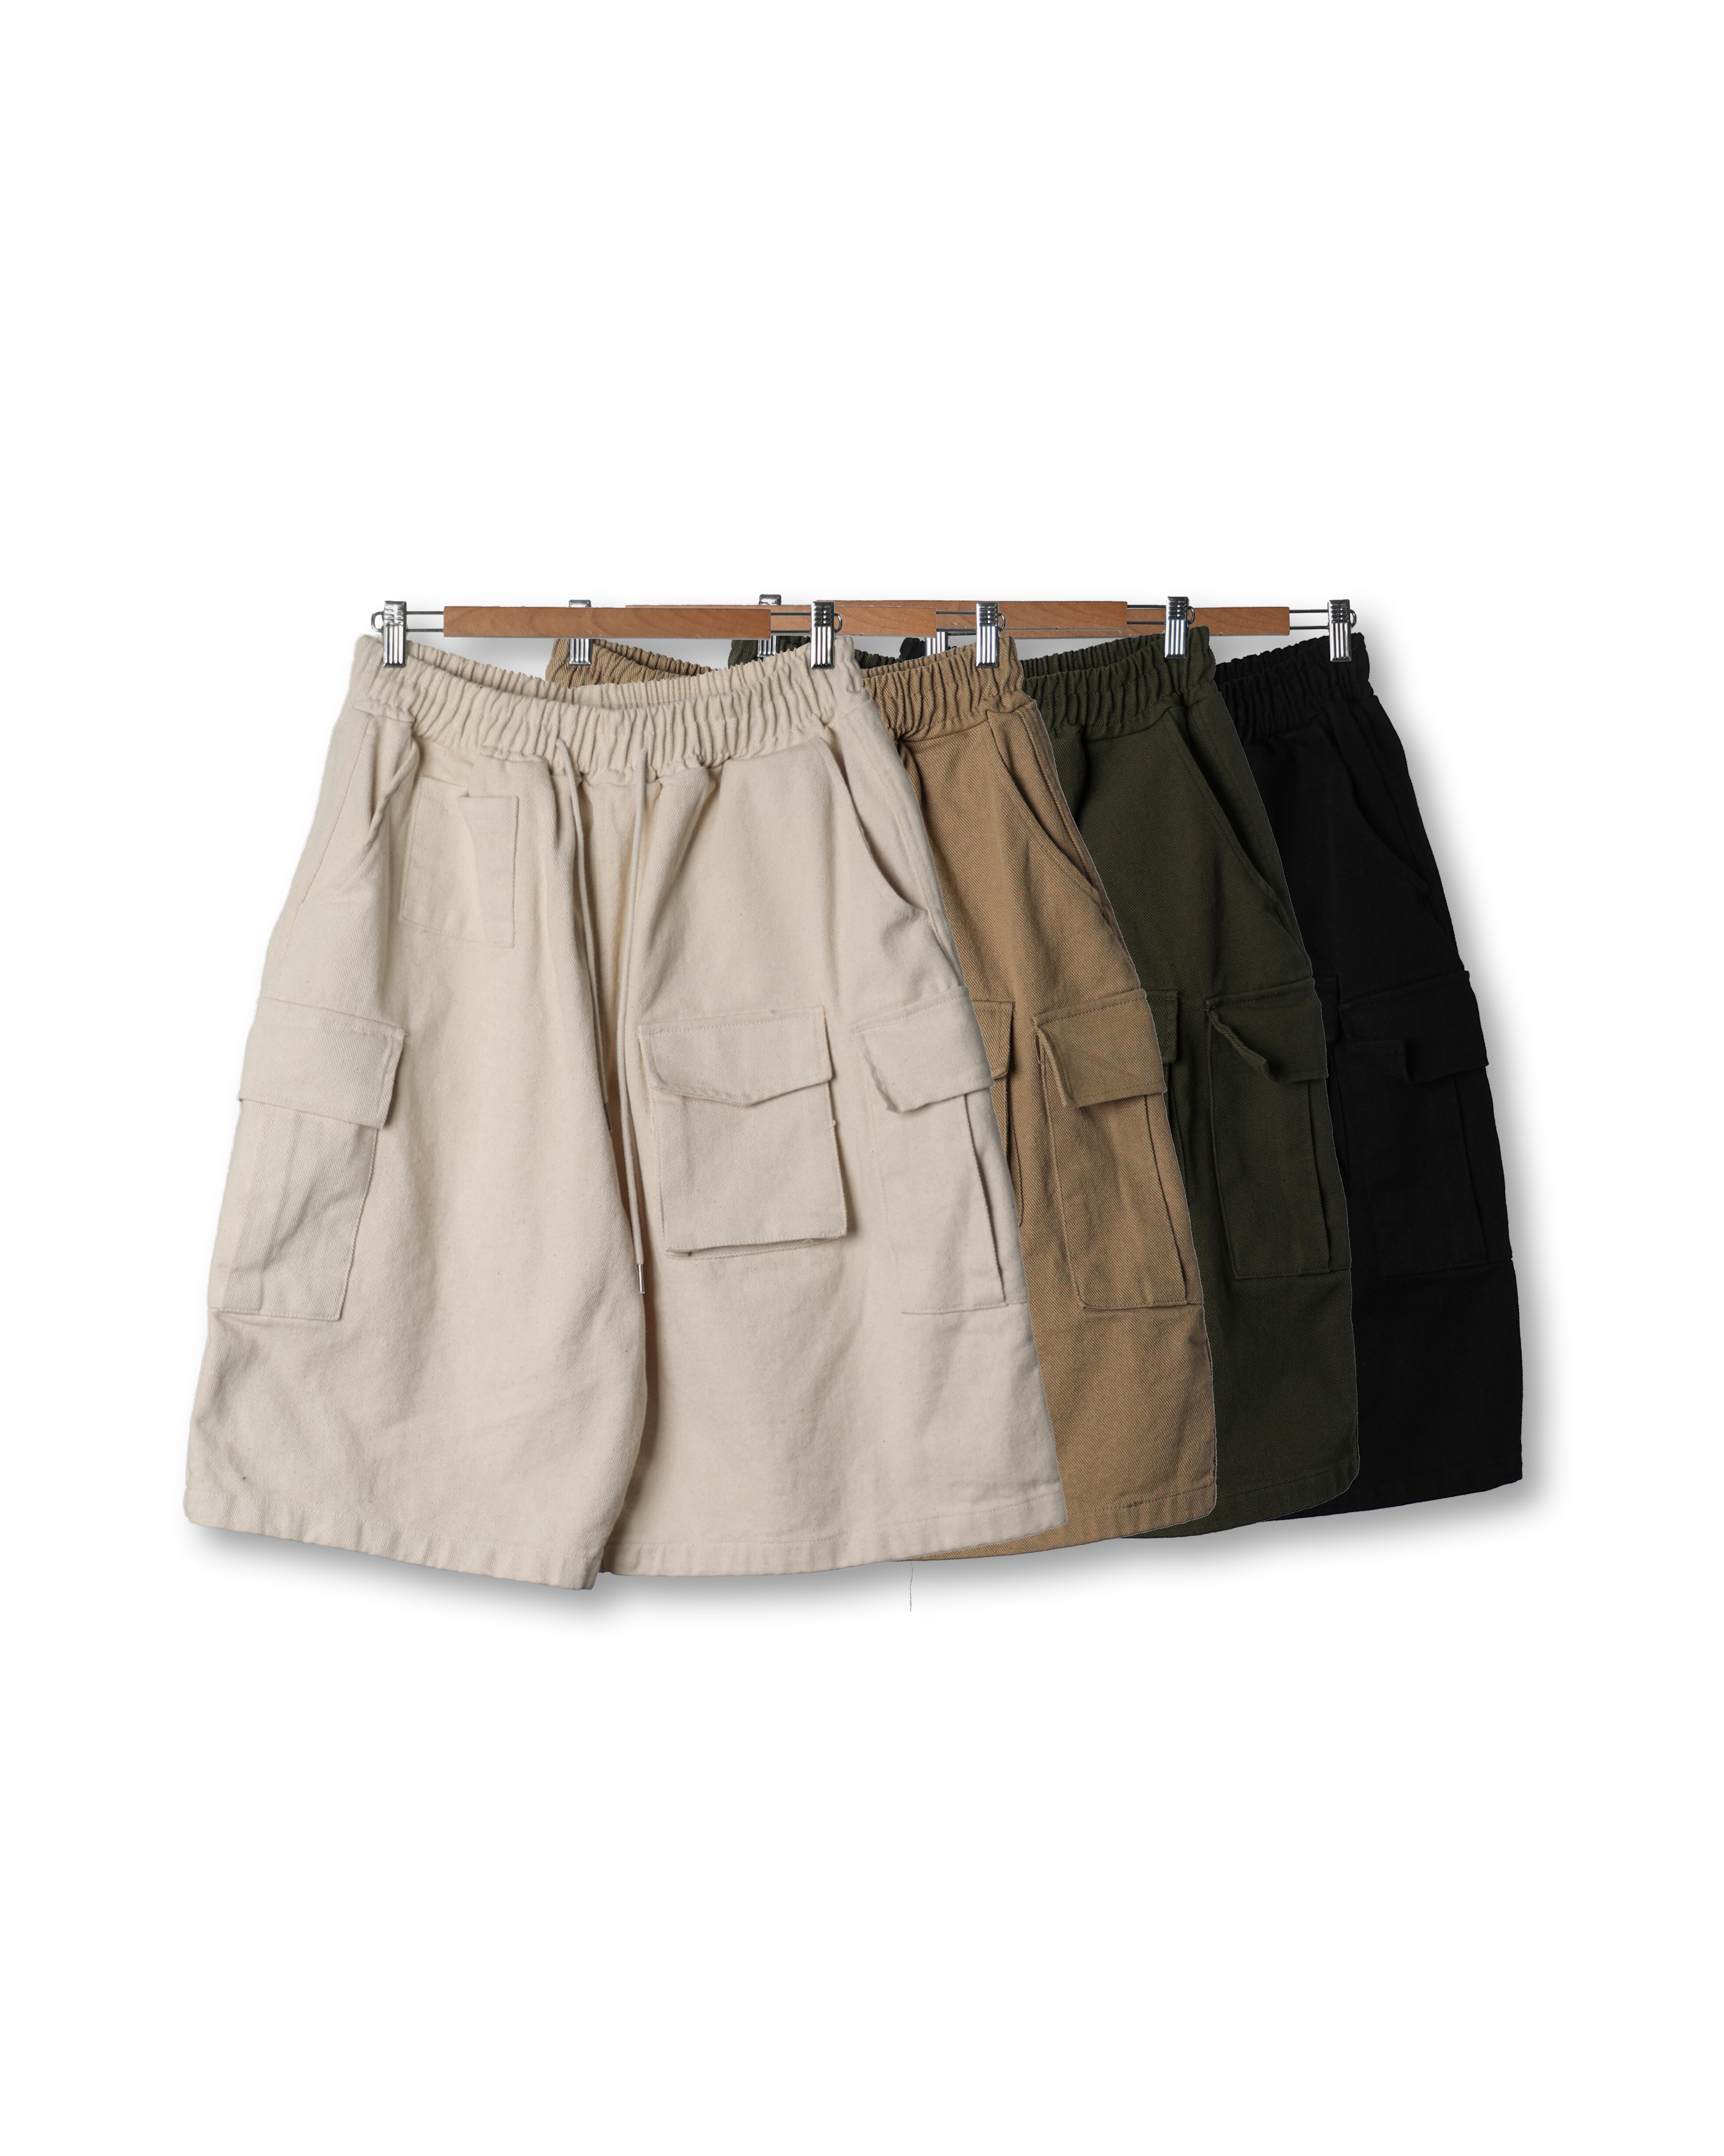 PCNT Work Cargo Pocket Bermuda Pants (Black/Olive/Beige/Cream) - 2차 리오더 (5/24 배송예정)